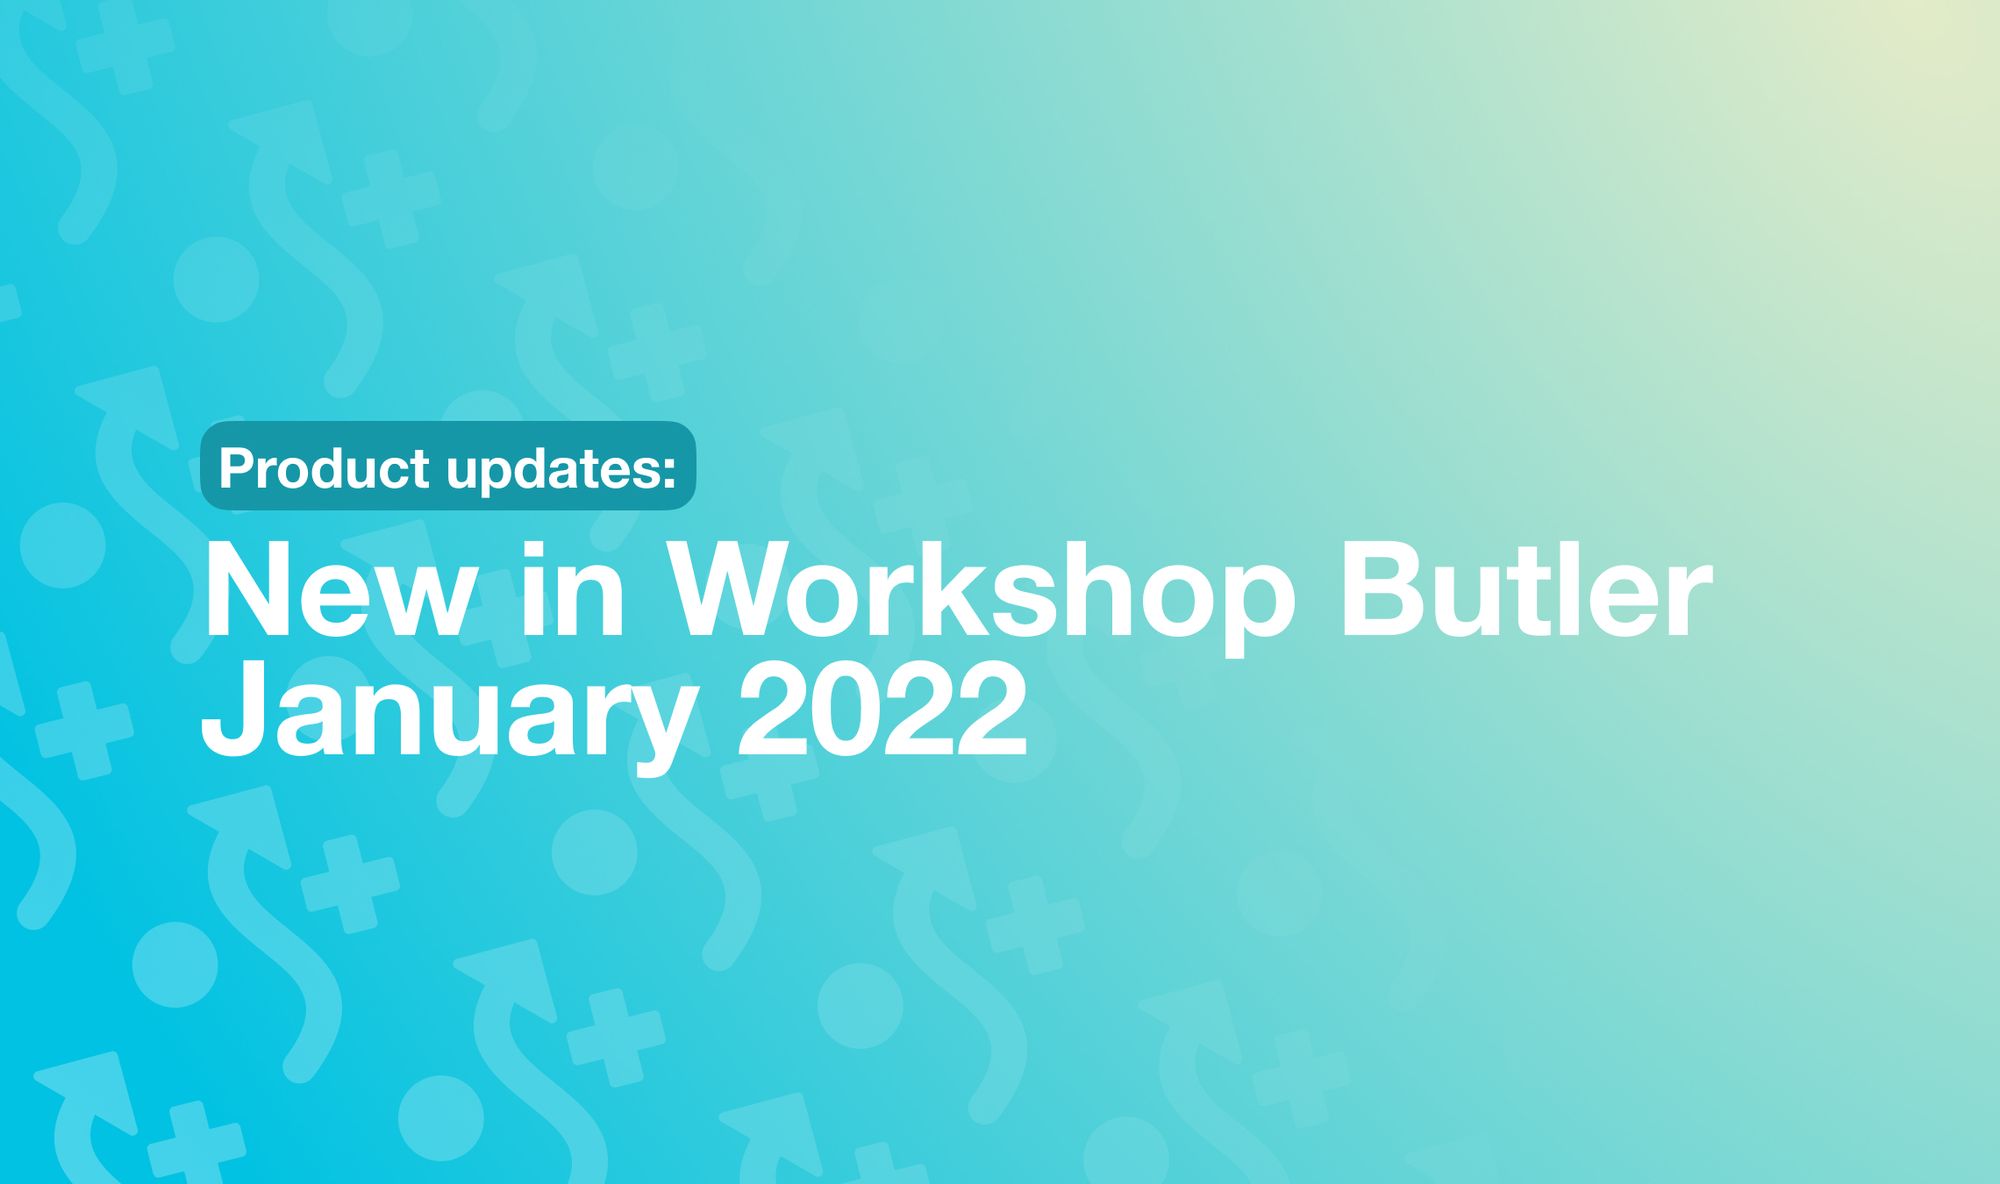 New in Workshop Butler Jan 2022